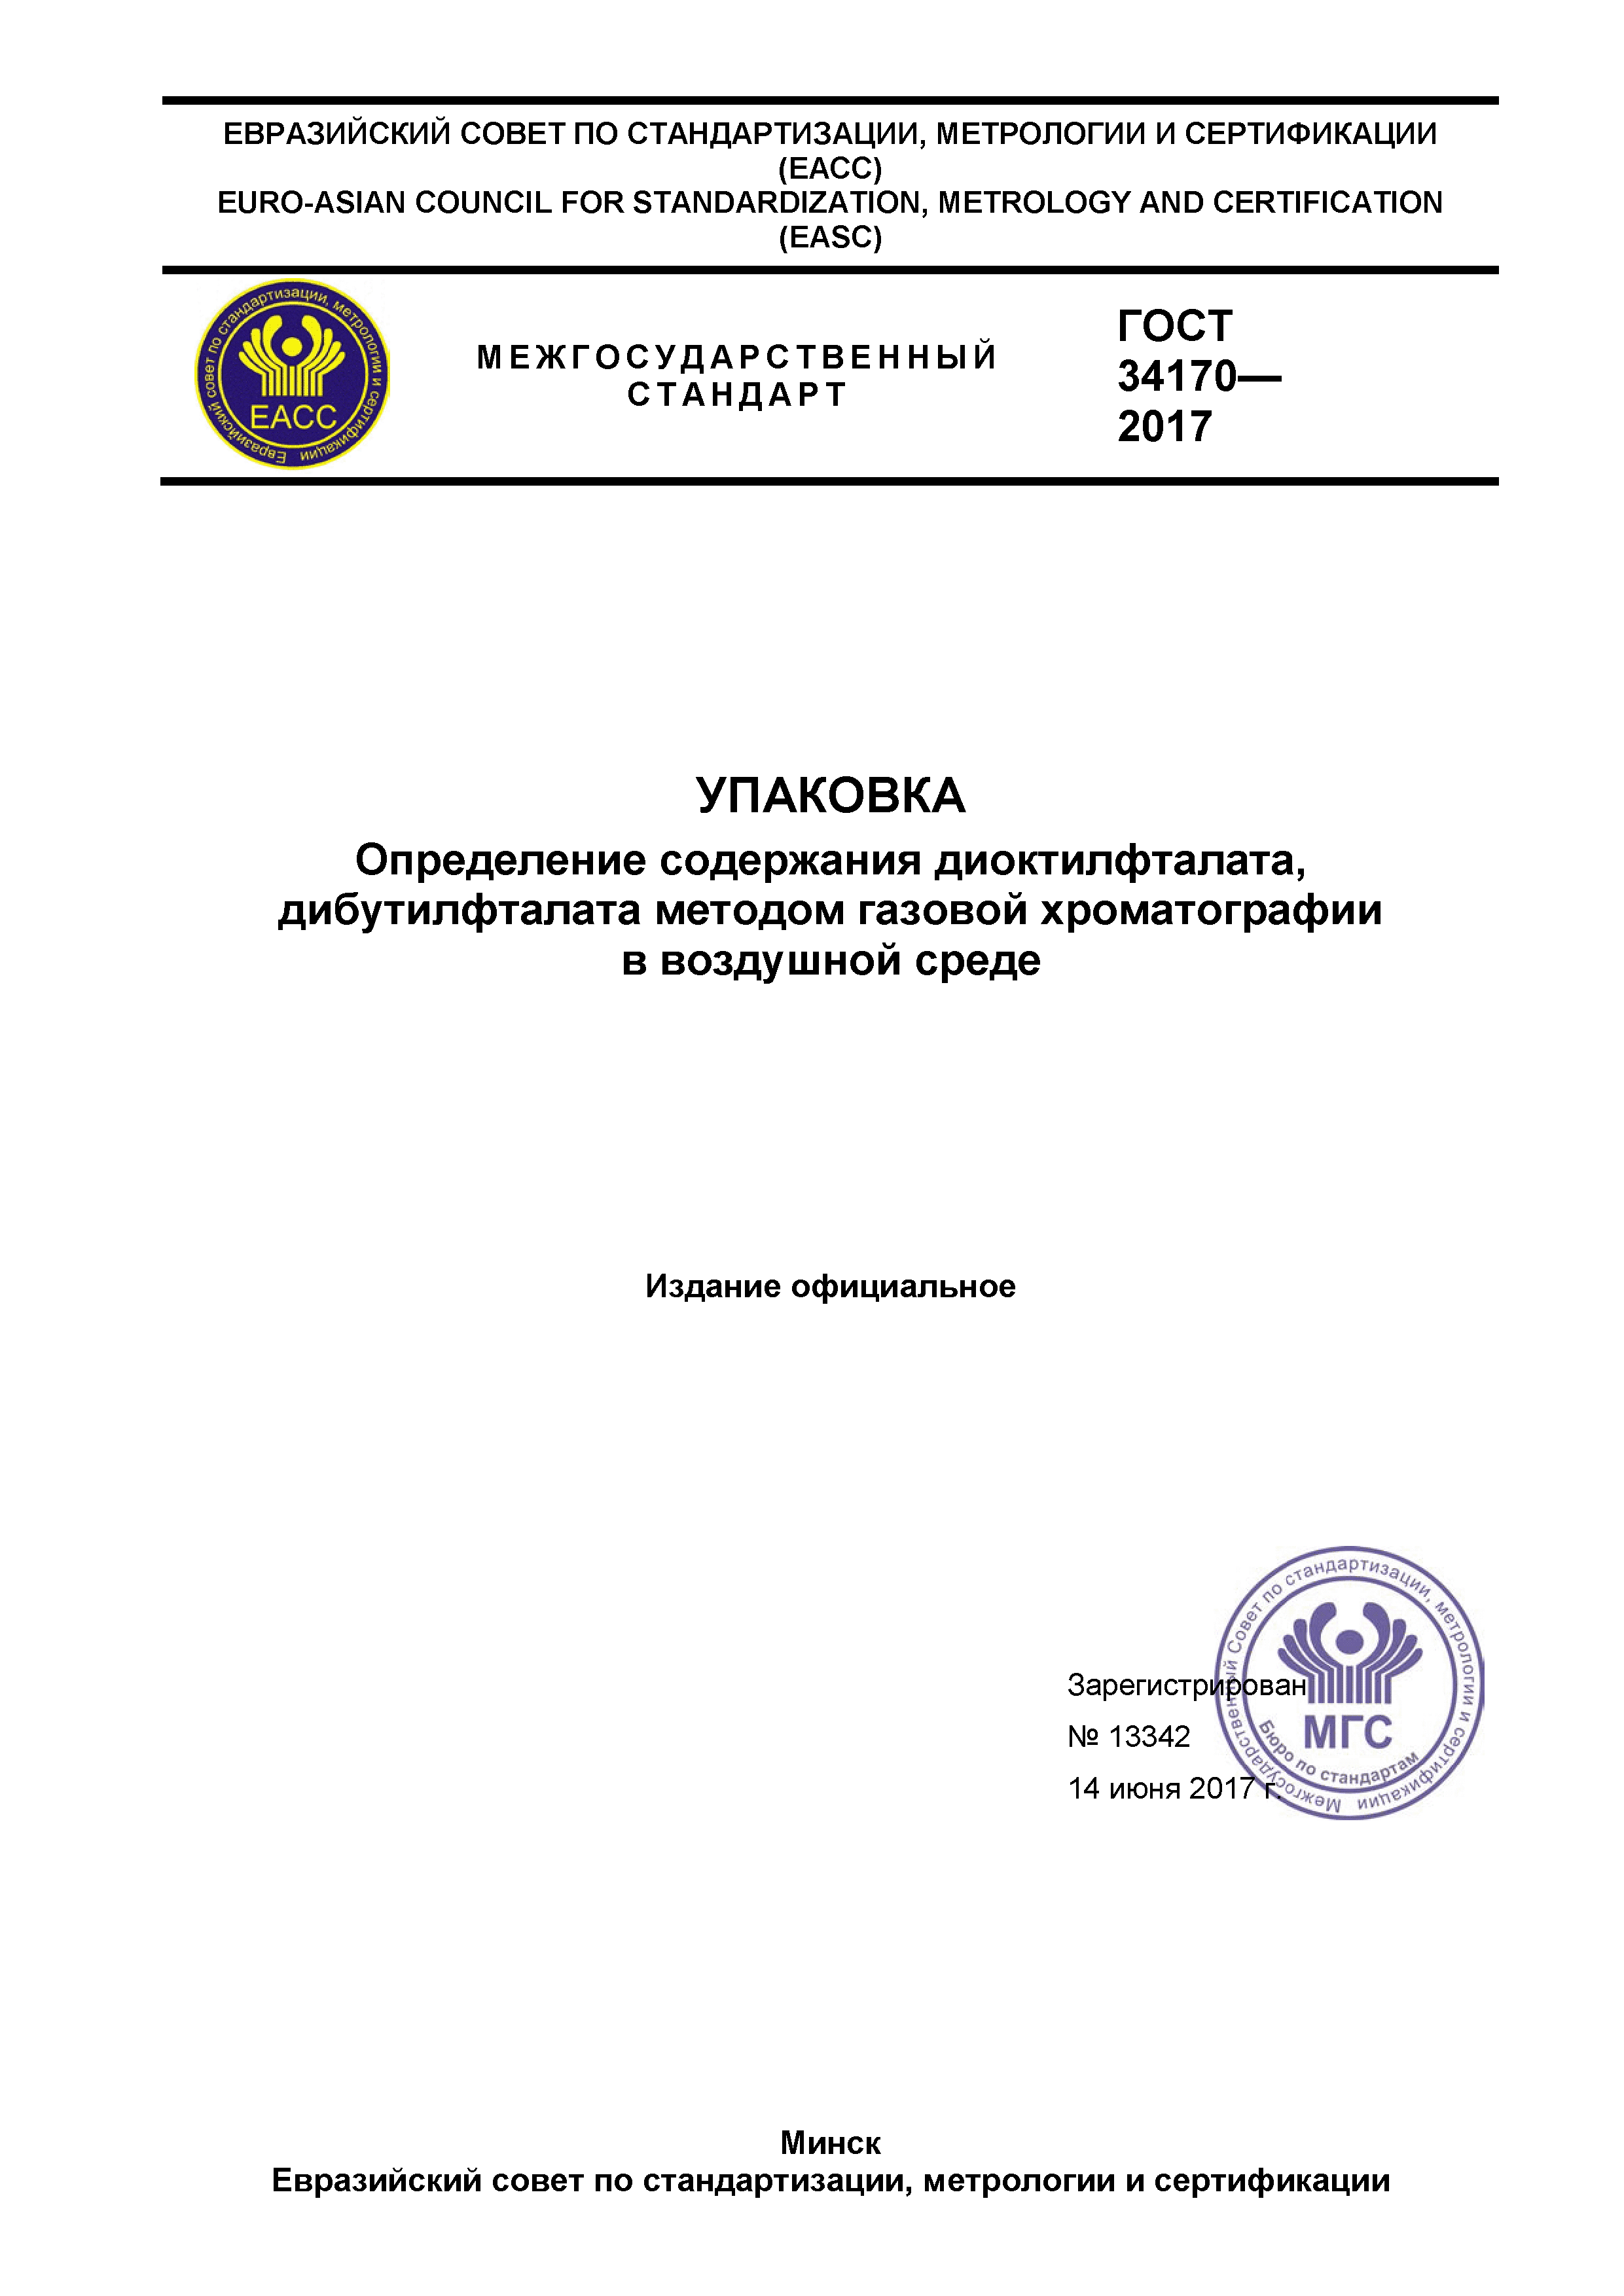 ГОСТ 34170-2017